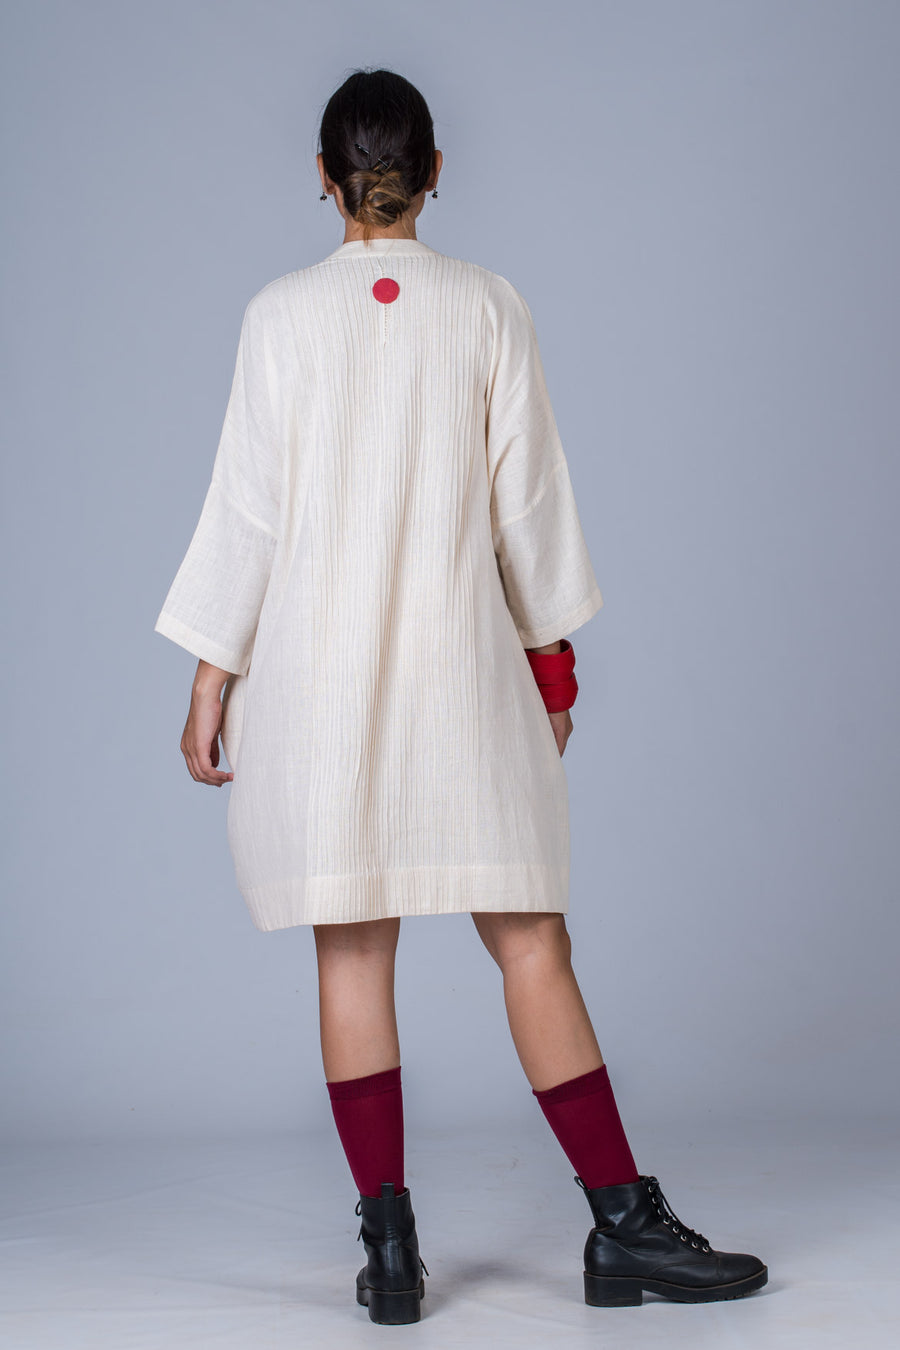 Off White Desi Cotton Dress - MUKTA - Upasana Design Studio